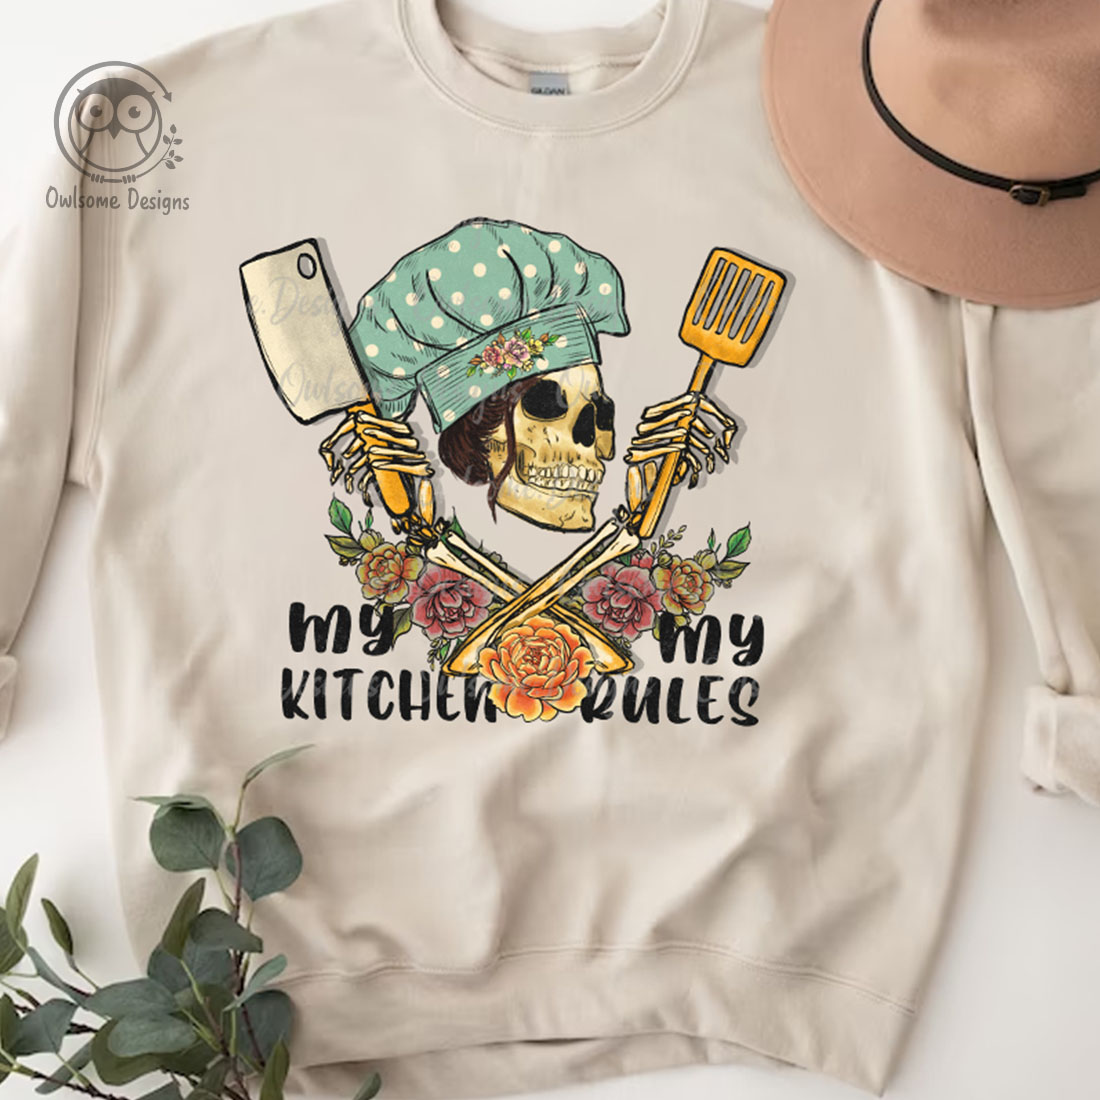 Image of irresistible skeleton print sweatshirt with kitchen utensils.